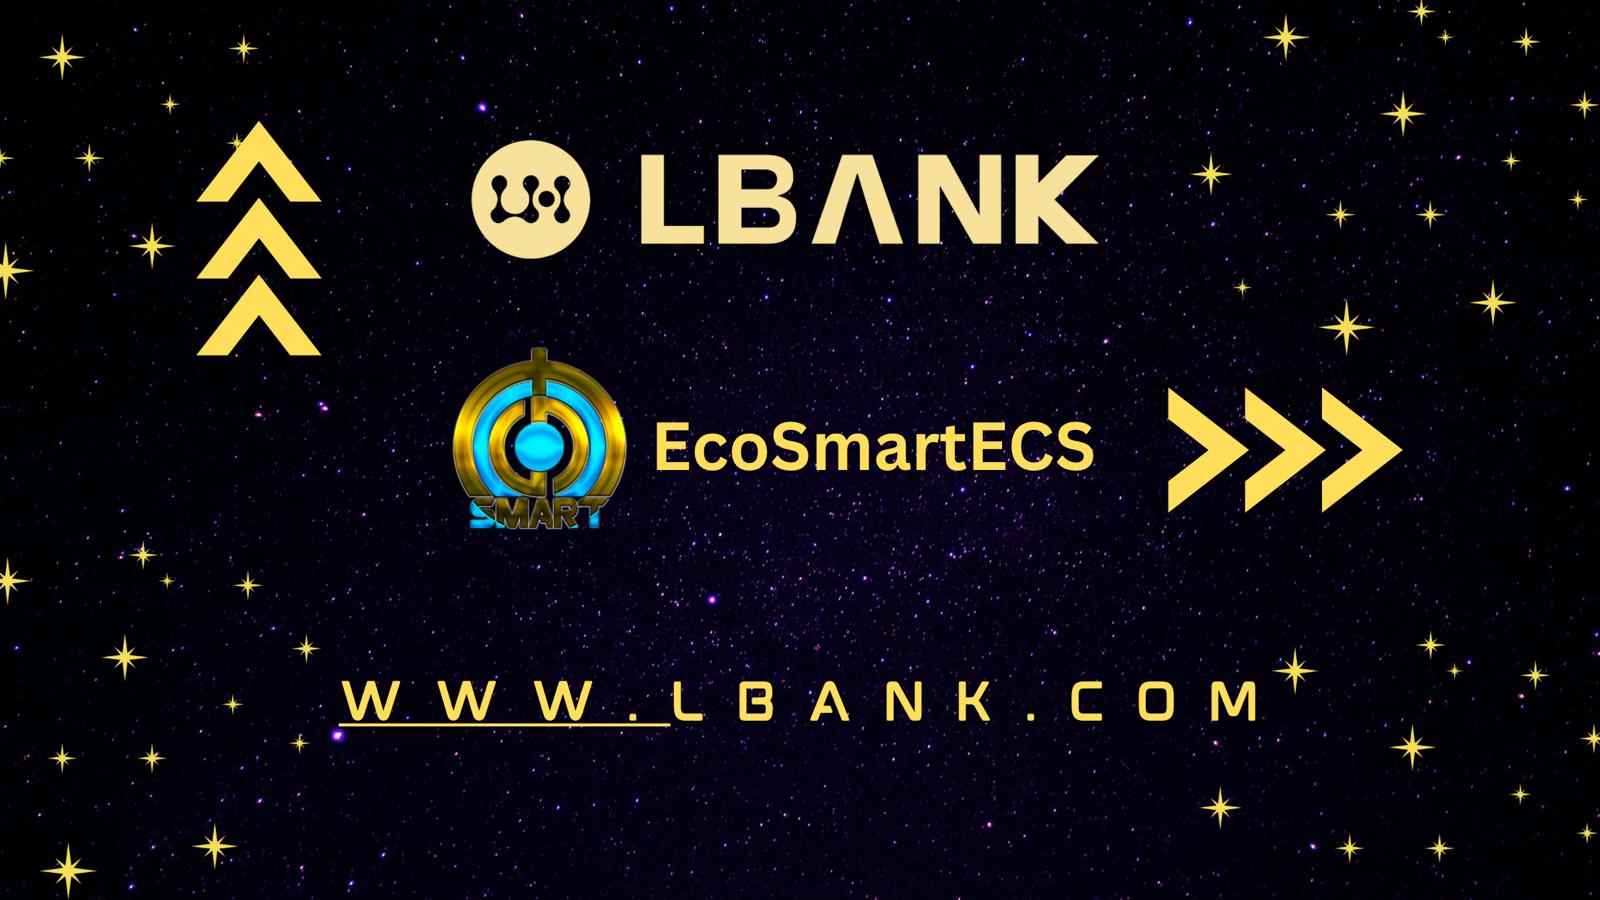 ecosmartecs-info-banner